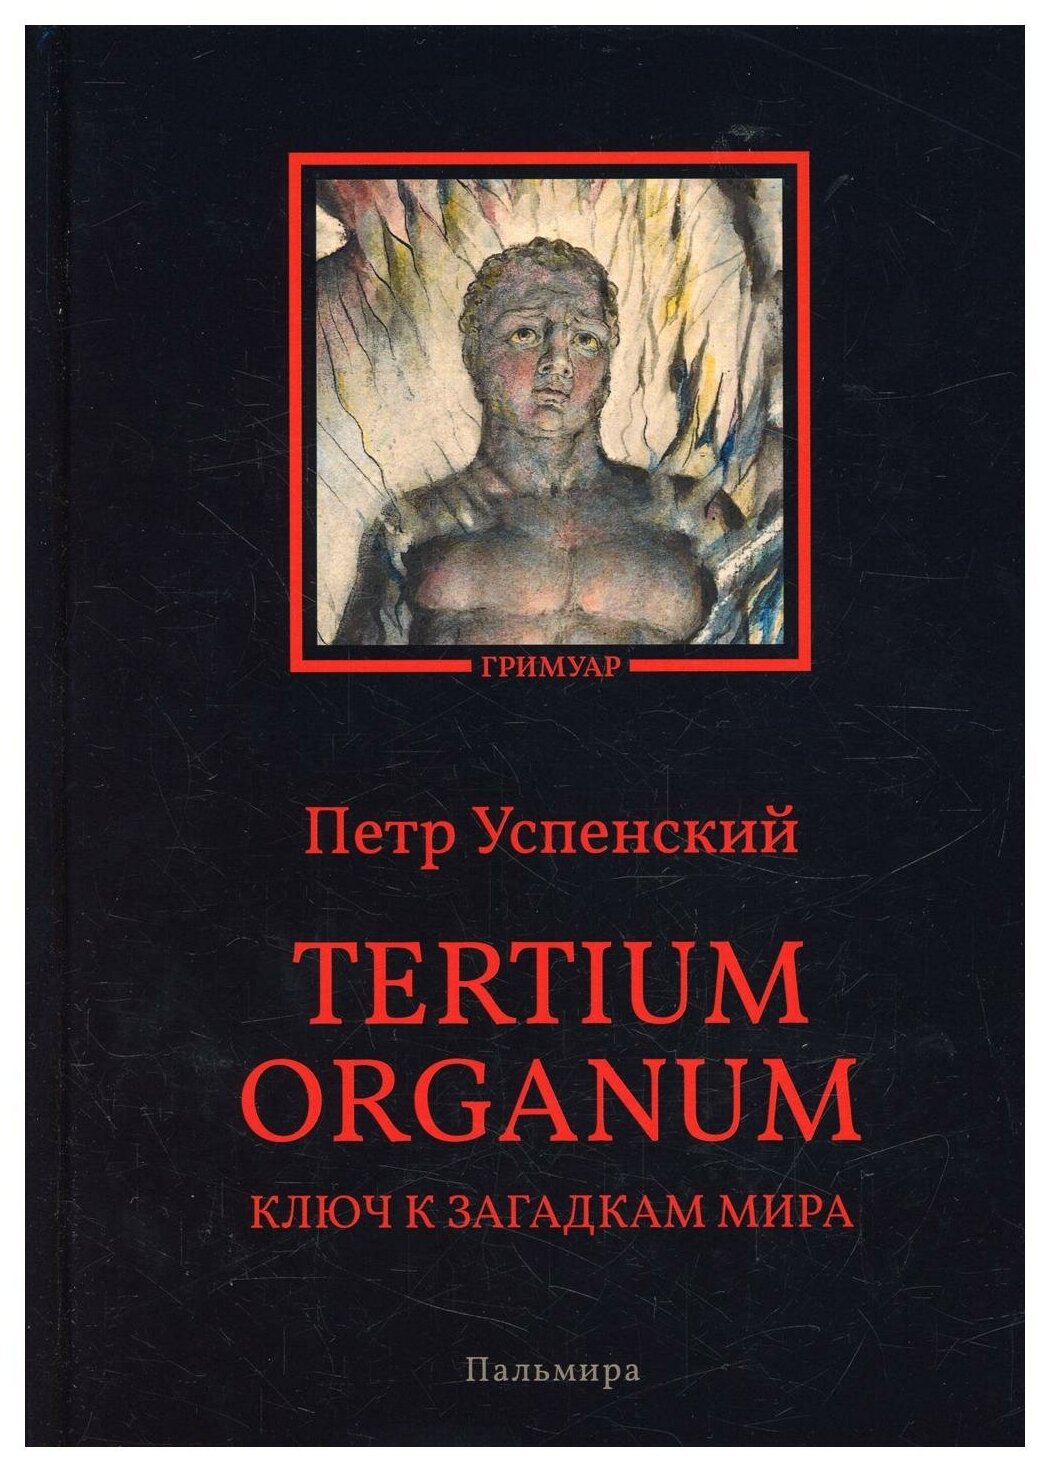 Tertium organum. Ключ к загадкам мира - фото №1